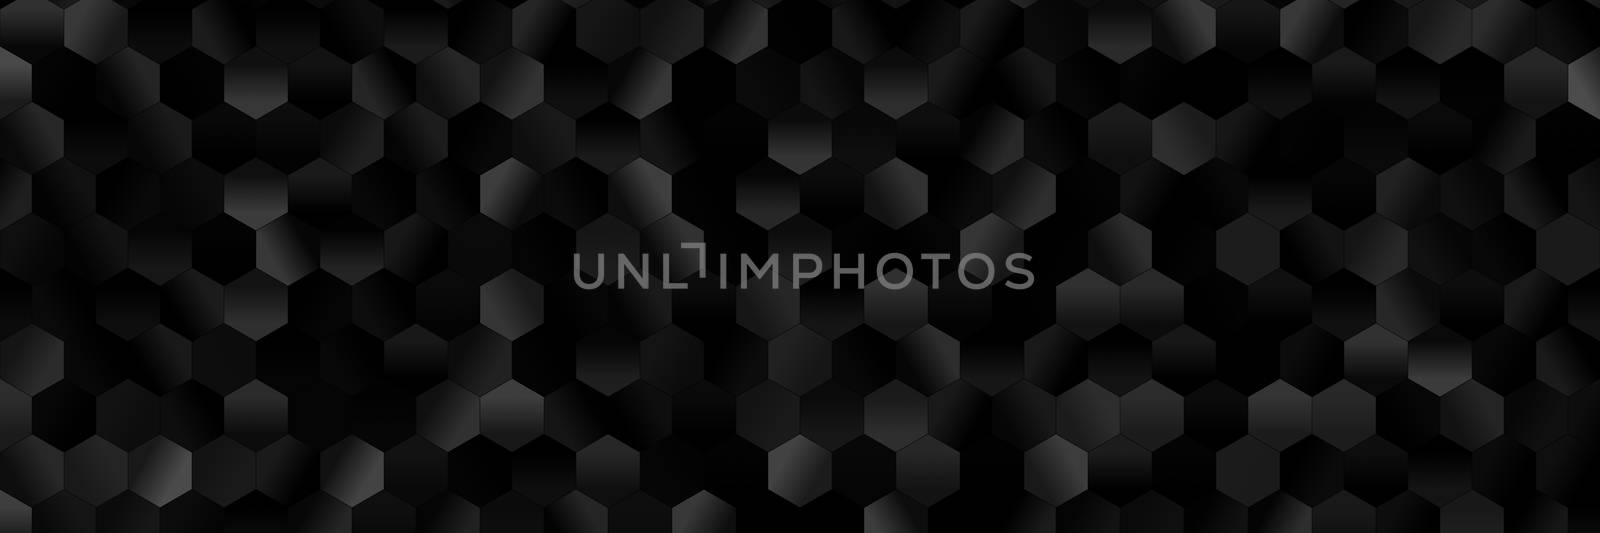 Black abstract hexagon pattern background illustration